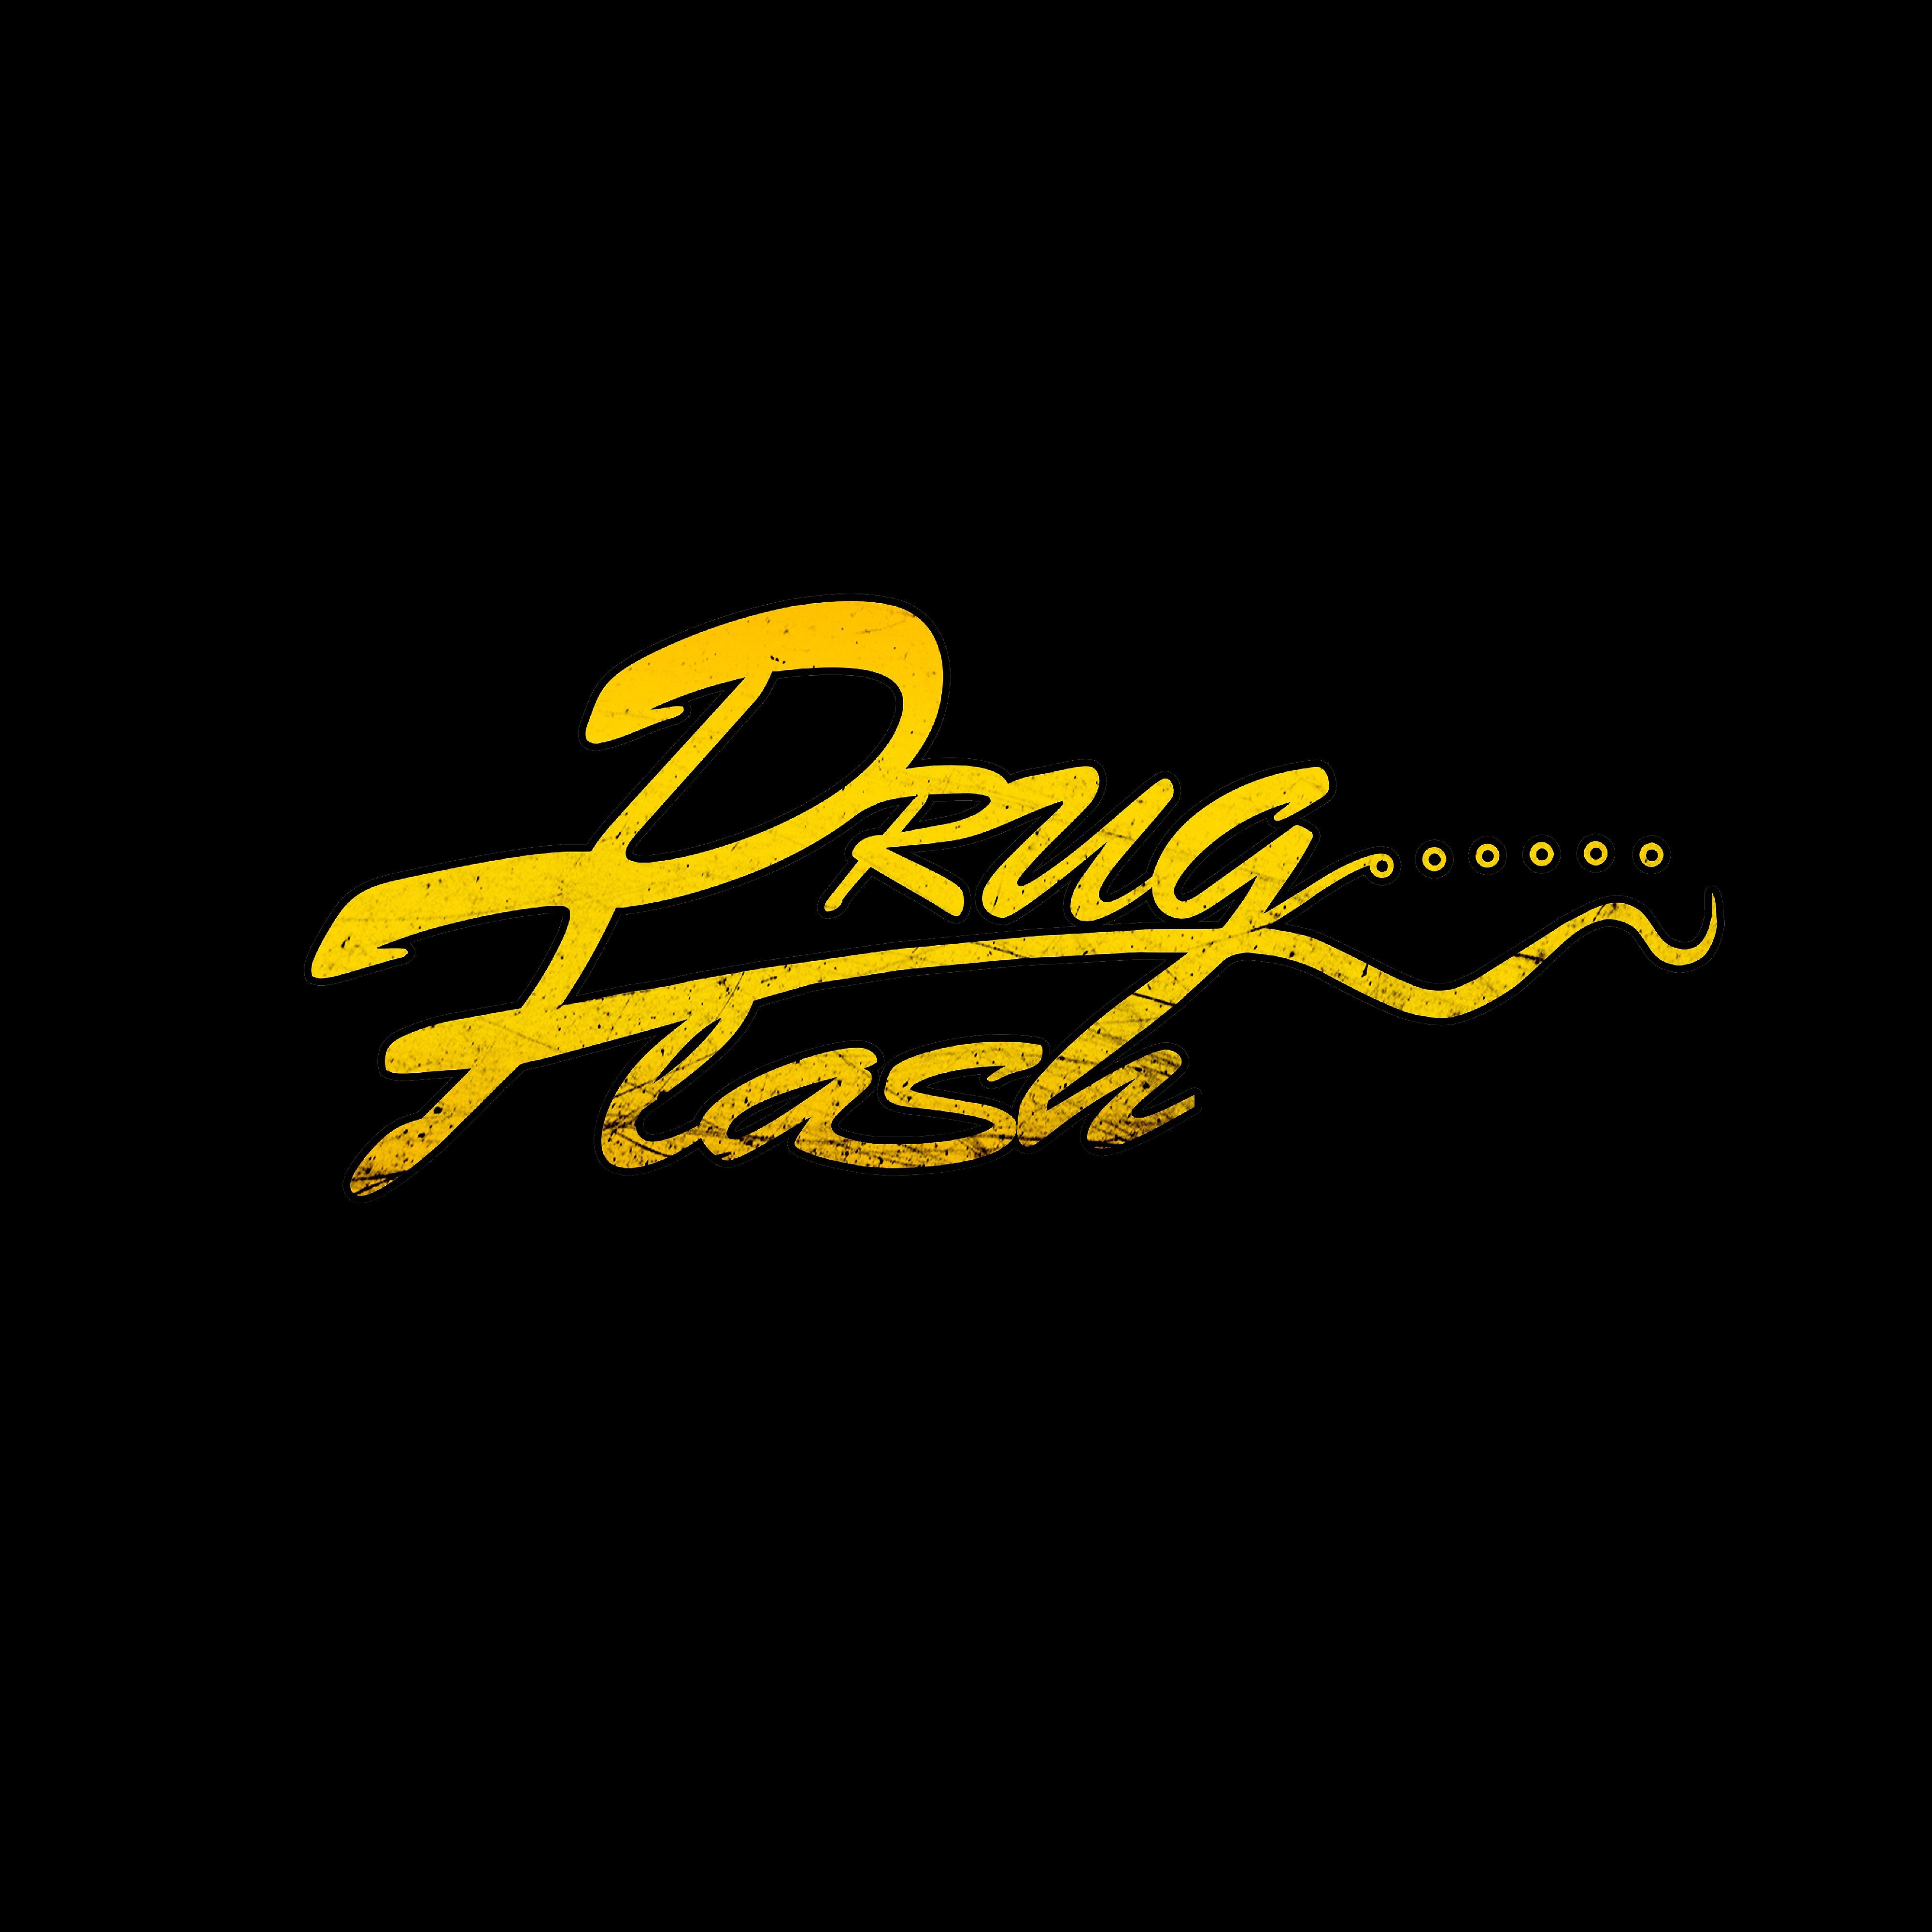 Flashing friend. Флеш альбом. Drug Flash. Drug Flash лого. Drug Flash mixтейп.